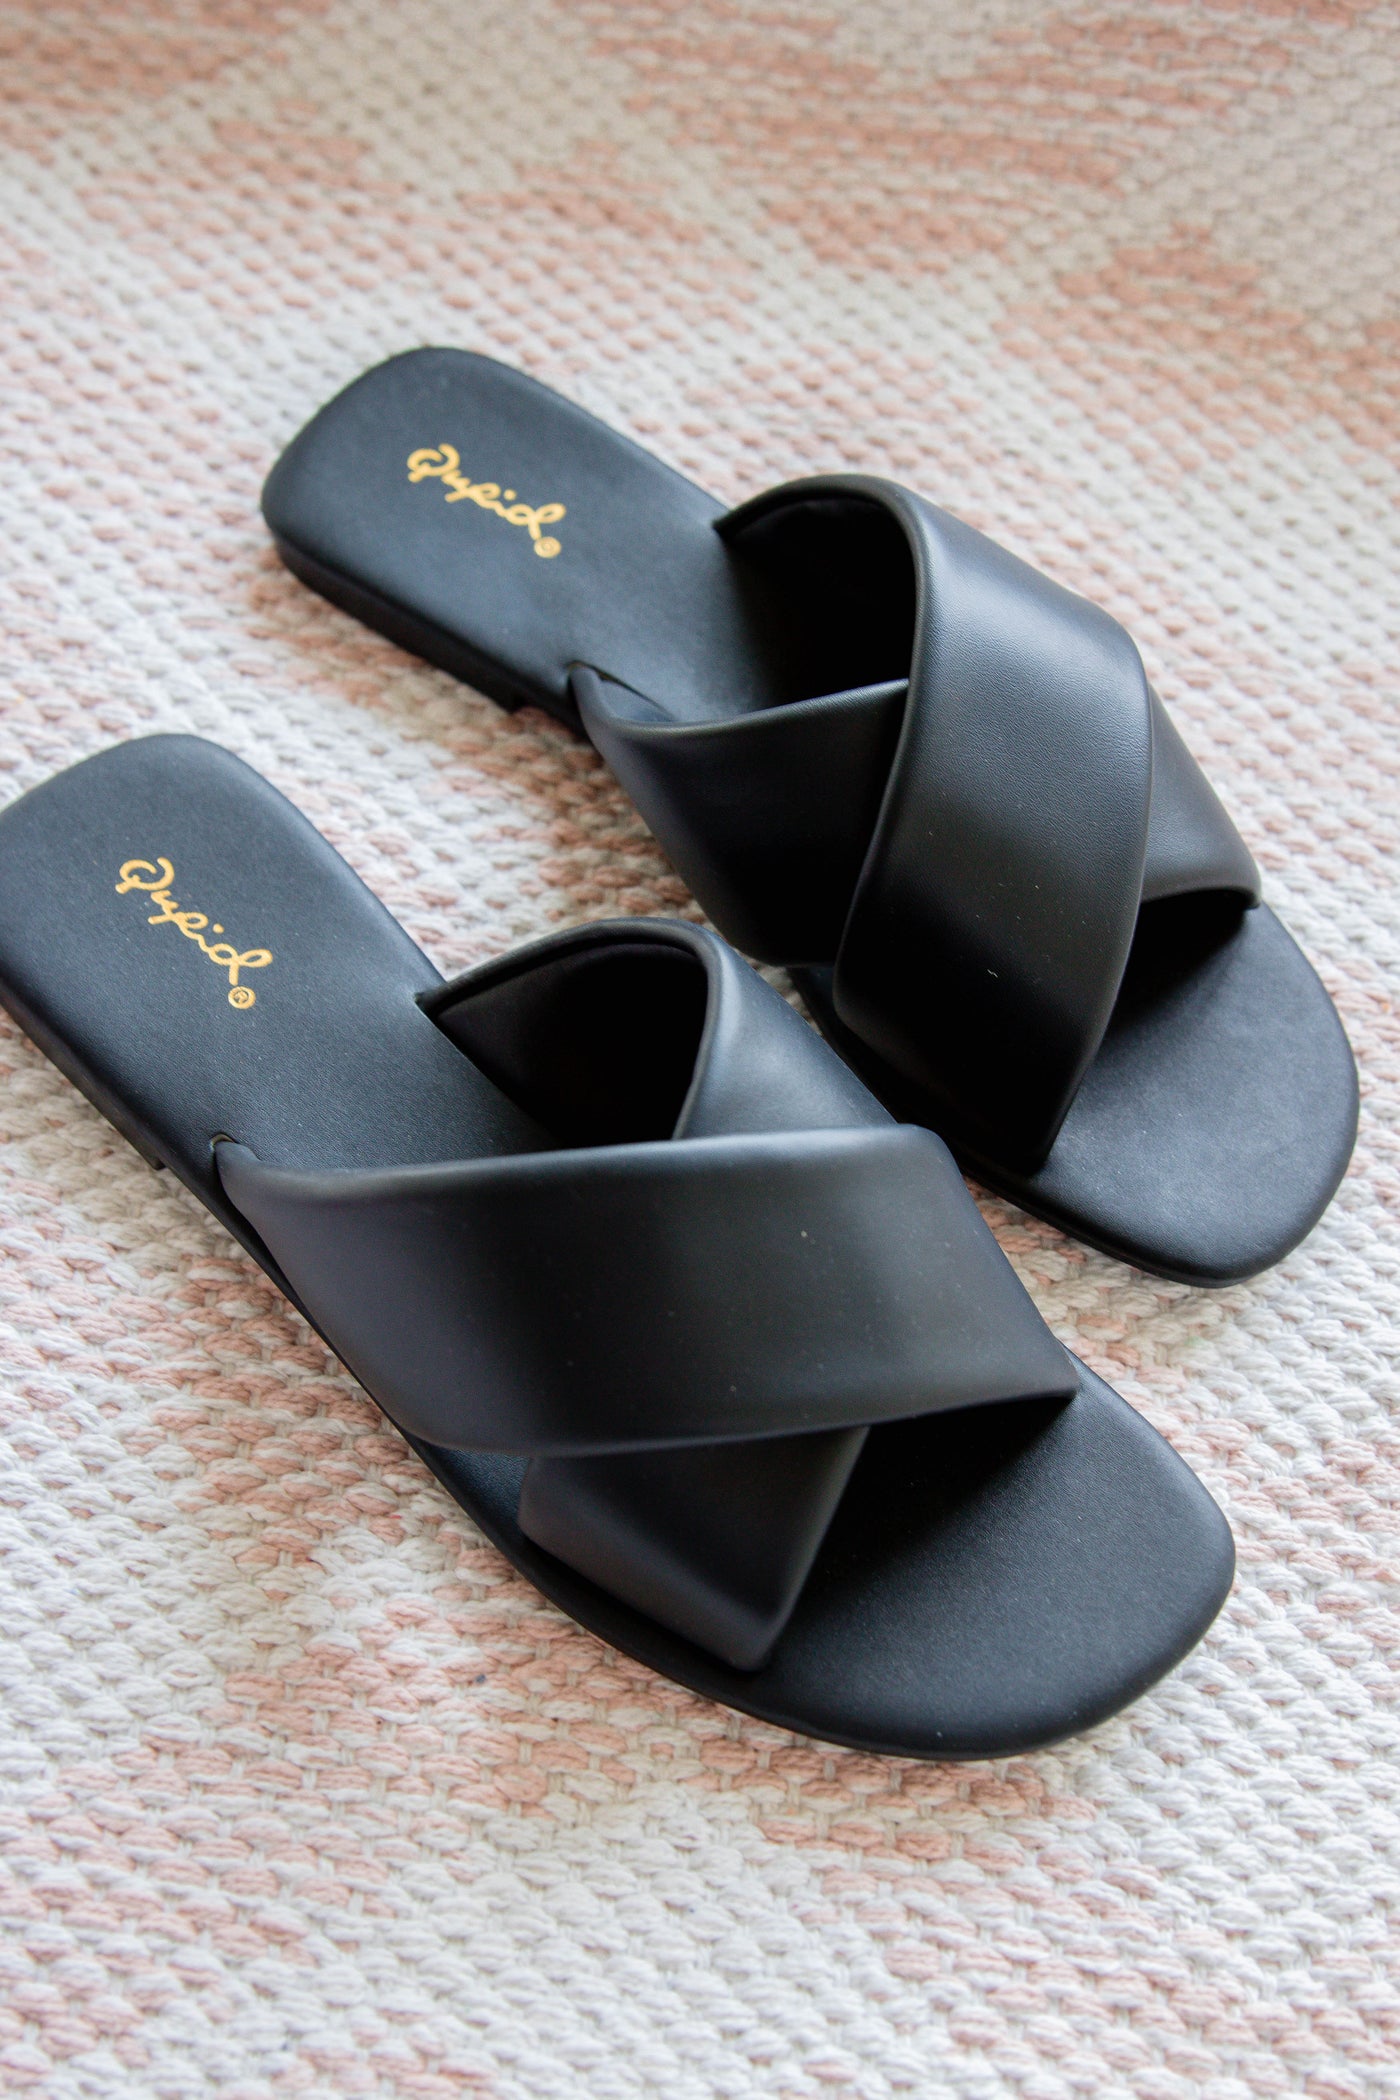 Open Toe Criss Cross Black Sandals - Women's Black Sandals - Qupid Sandals 